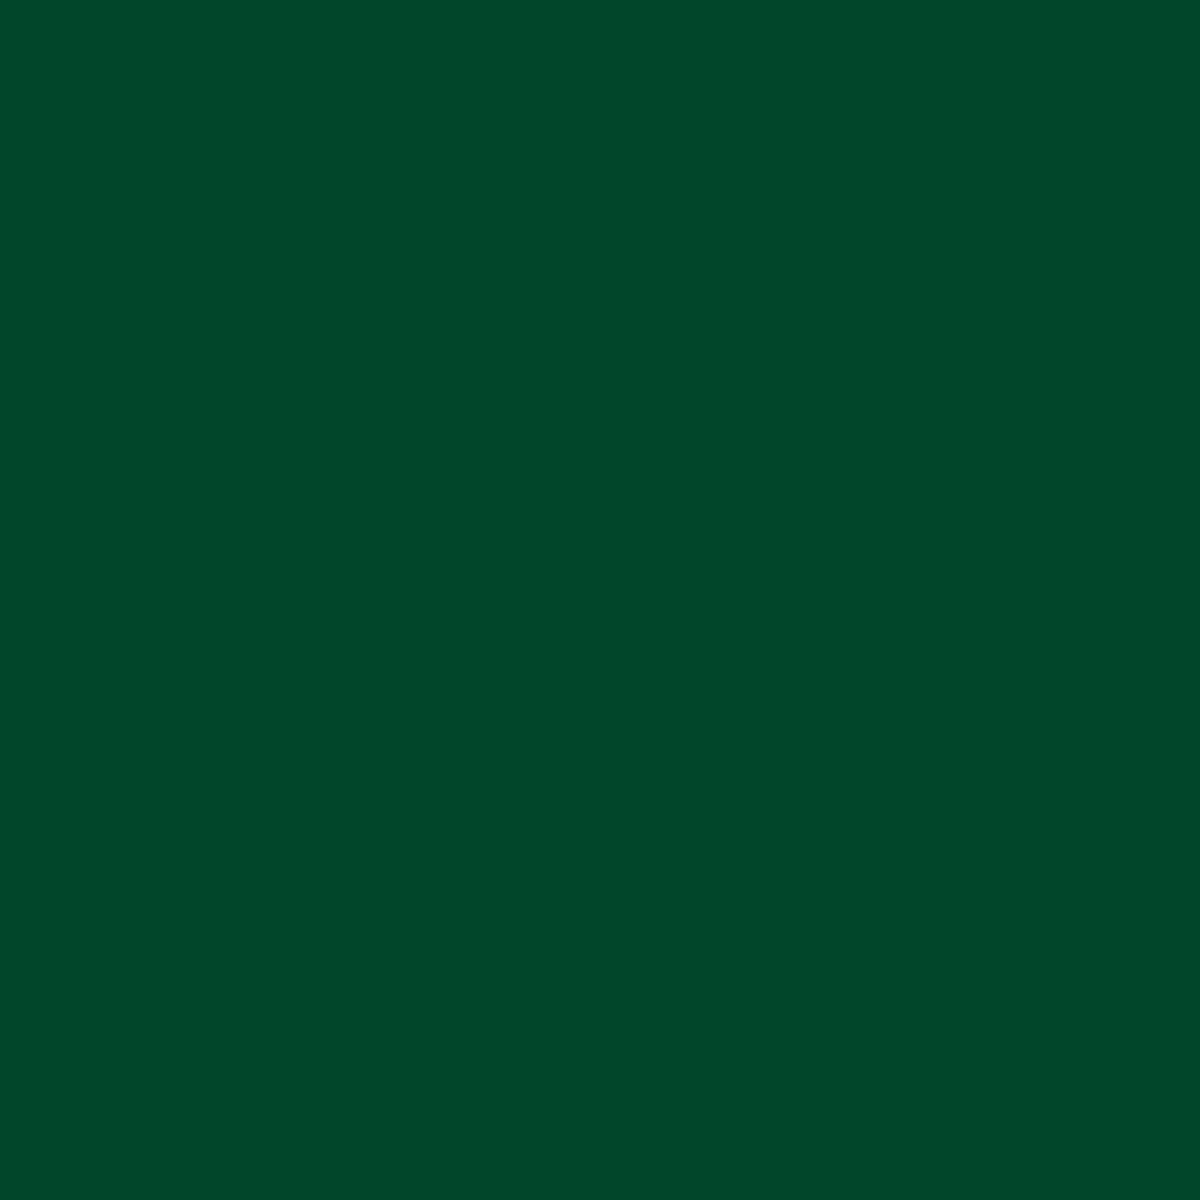 3M Scotchcal pellicola colorata 100-56 verde scuro 1,22m x 25m